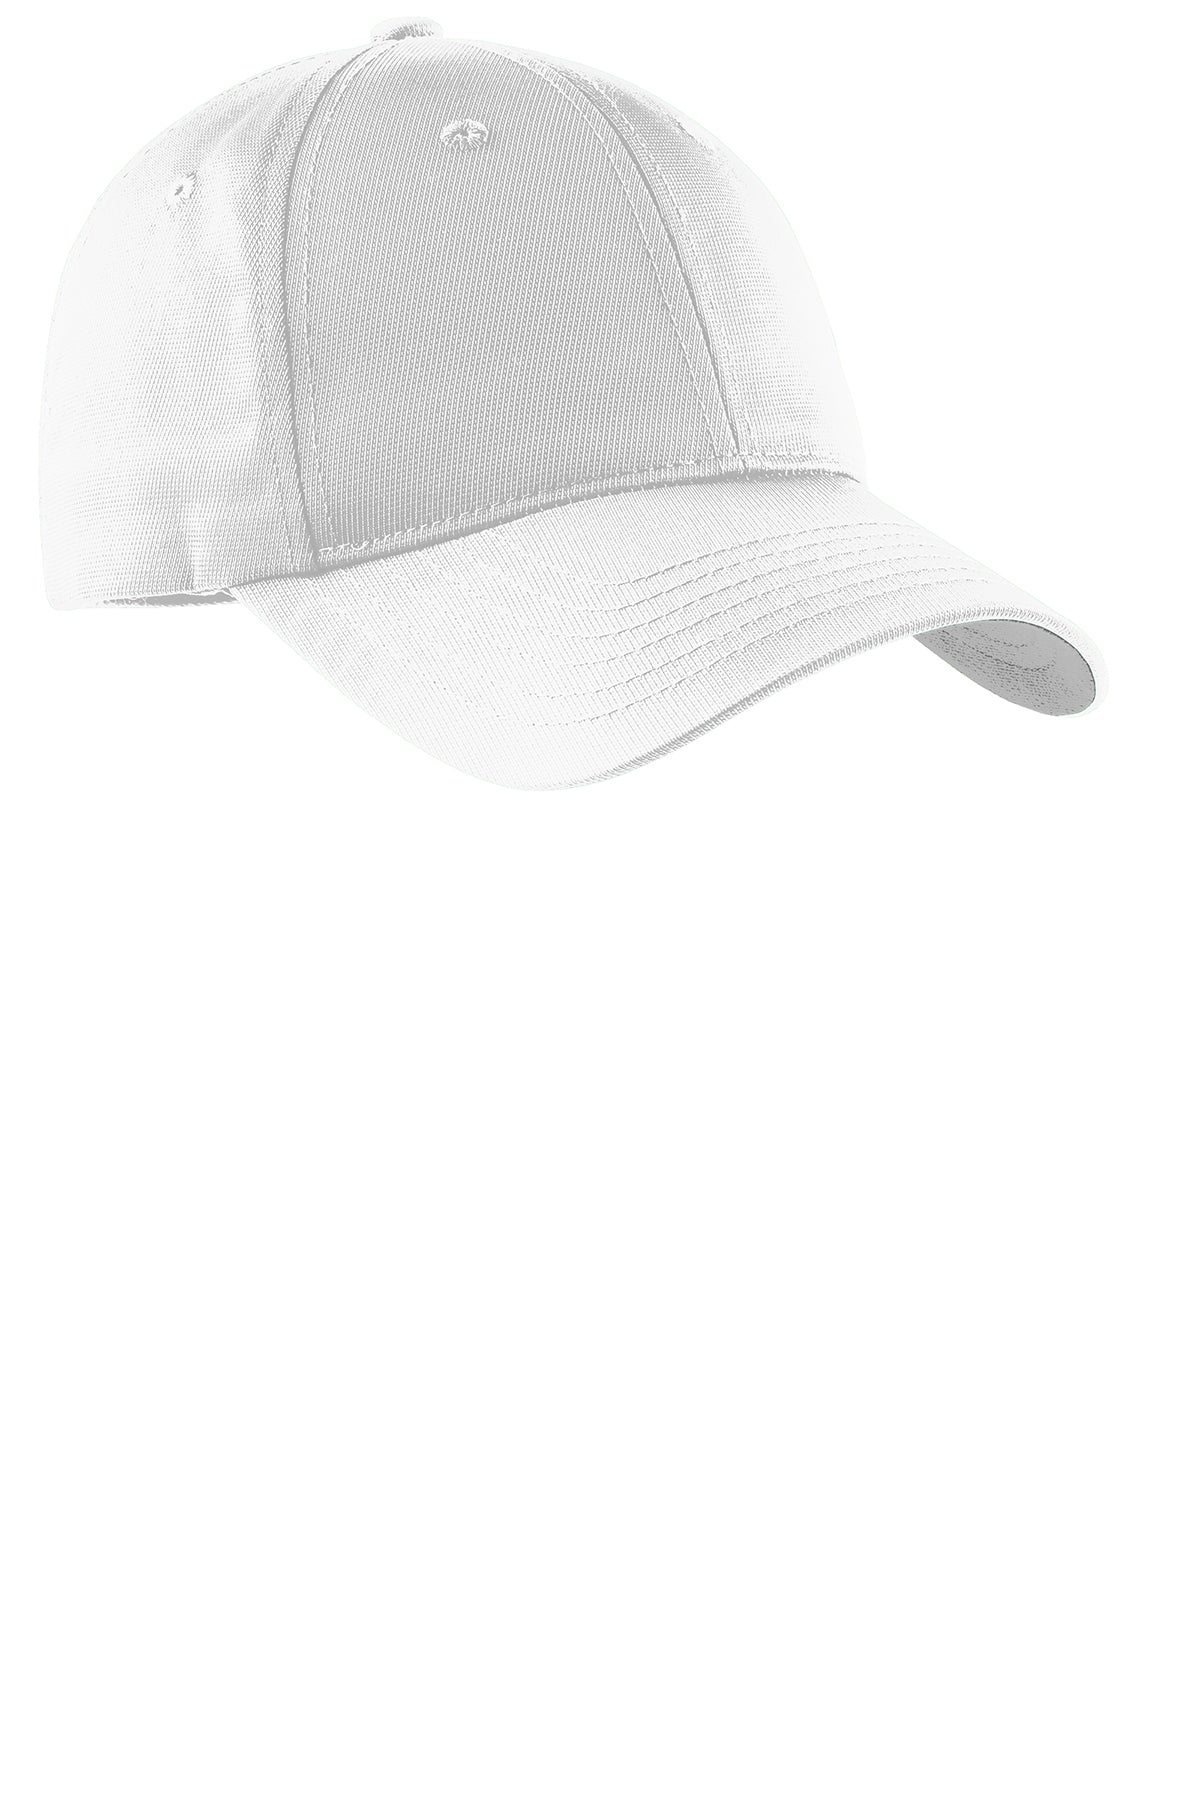 Sport-Tek Dry Zone Customized Nylon Caps, White